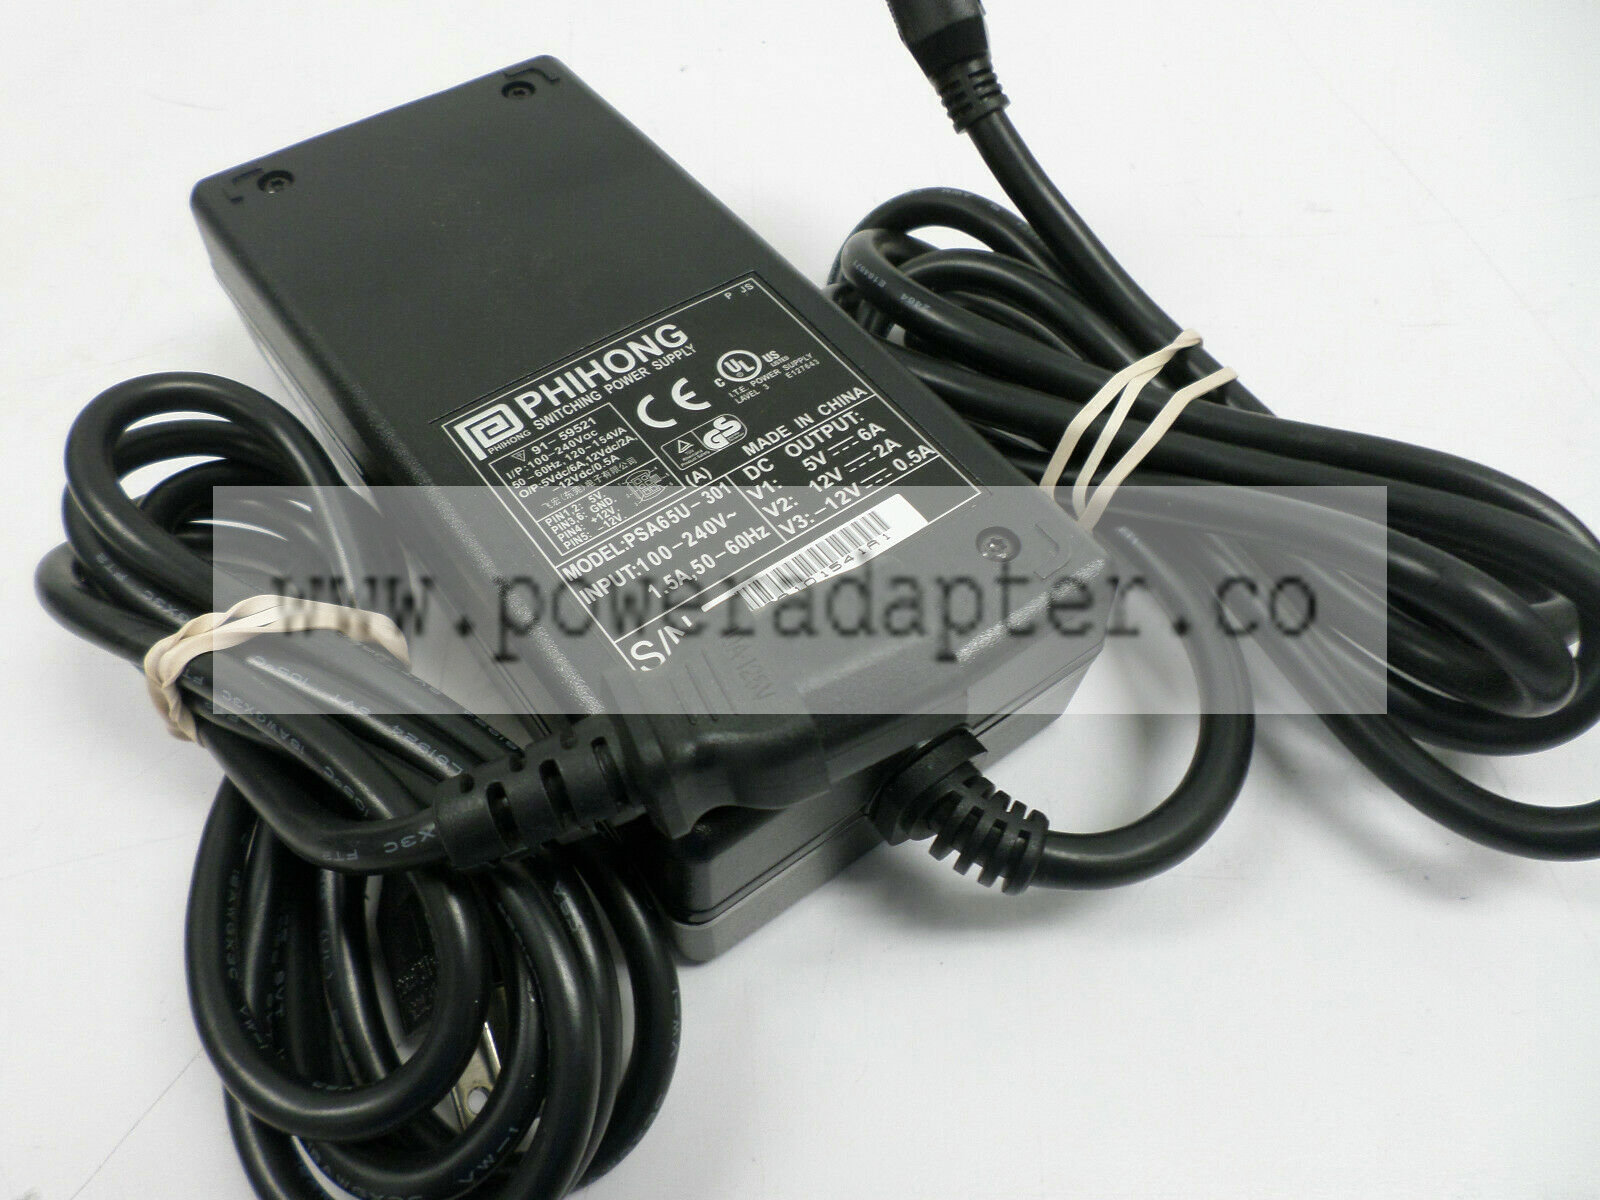 PhiHong AC/DC Power Supply Adapter 12V, 5V, 91-59521; PSA65U-301 Output Voltage(s): 12 V, 5V, -12V Brand: PhiHong Ty